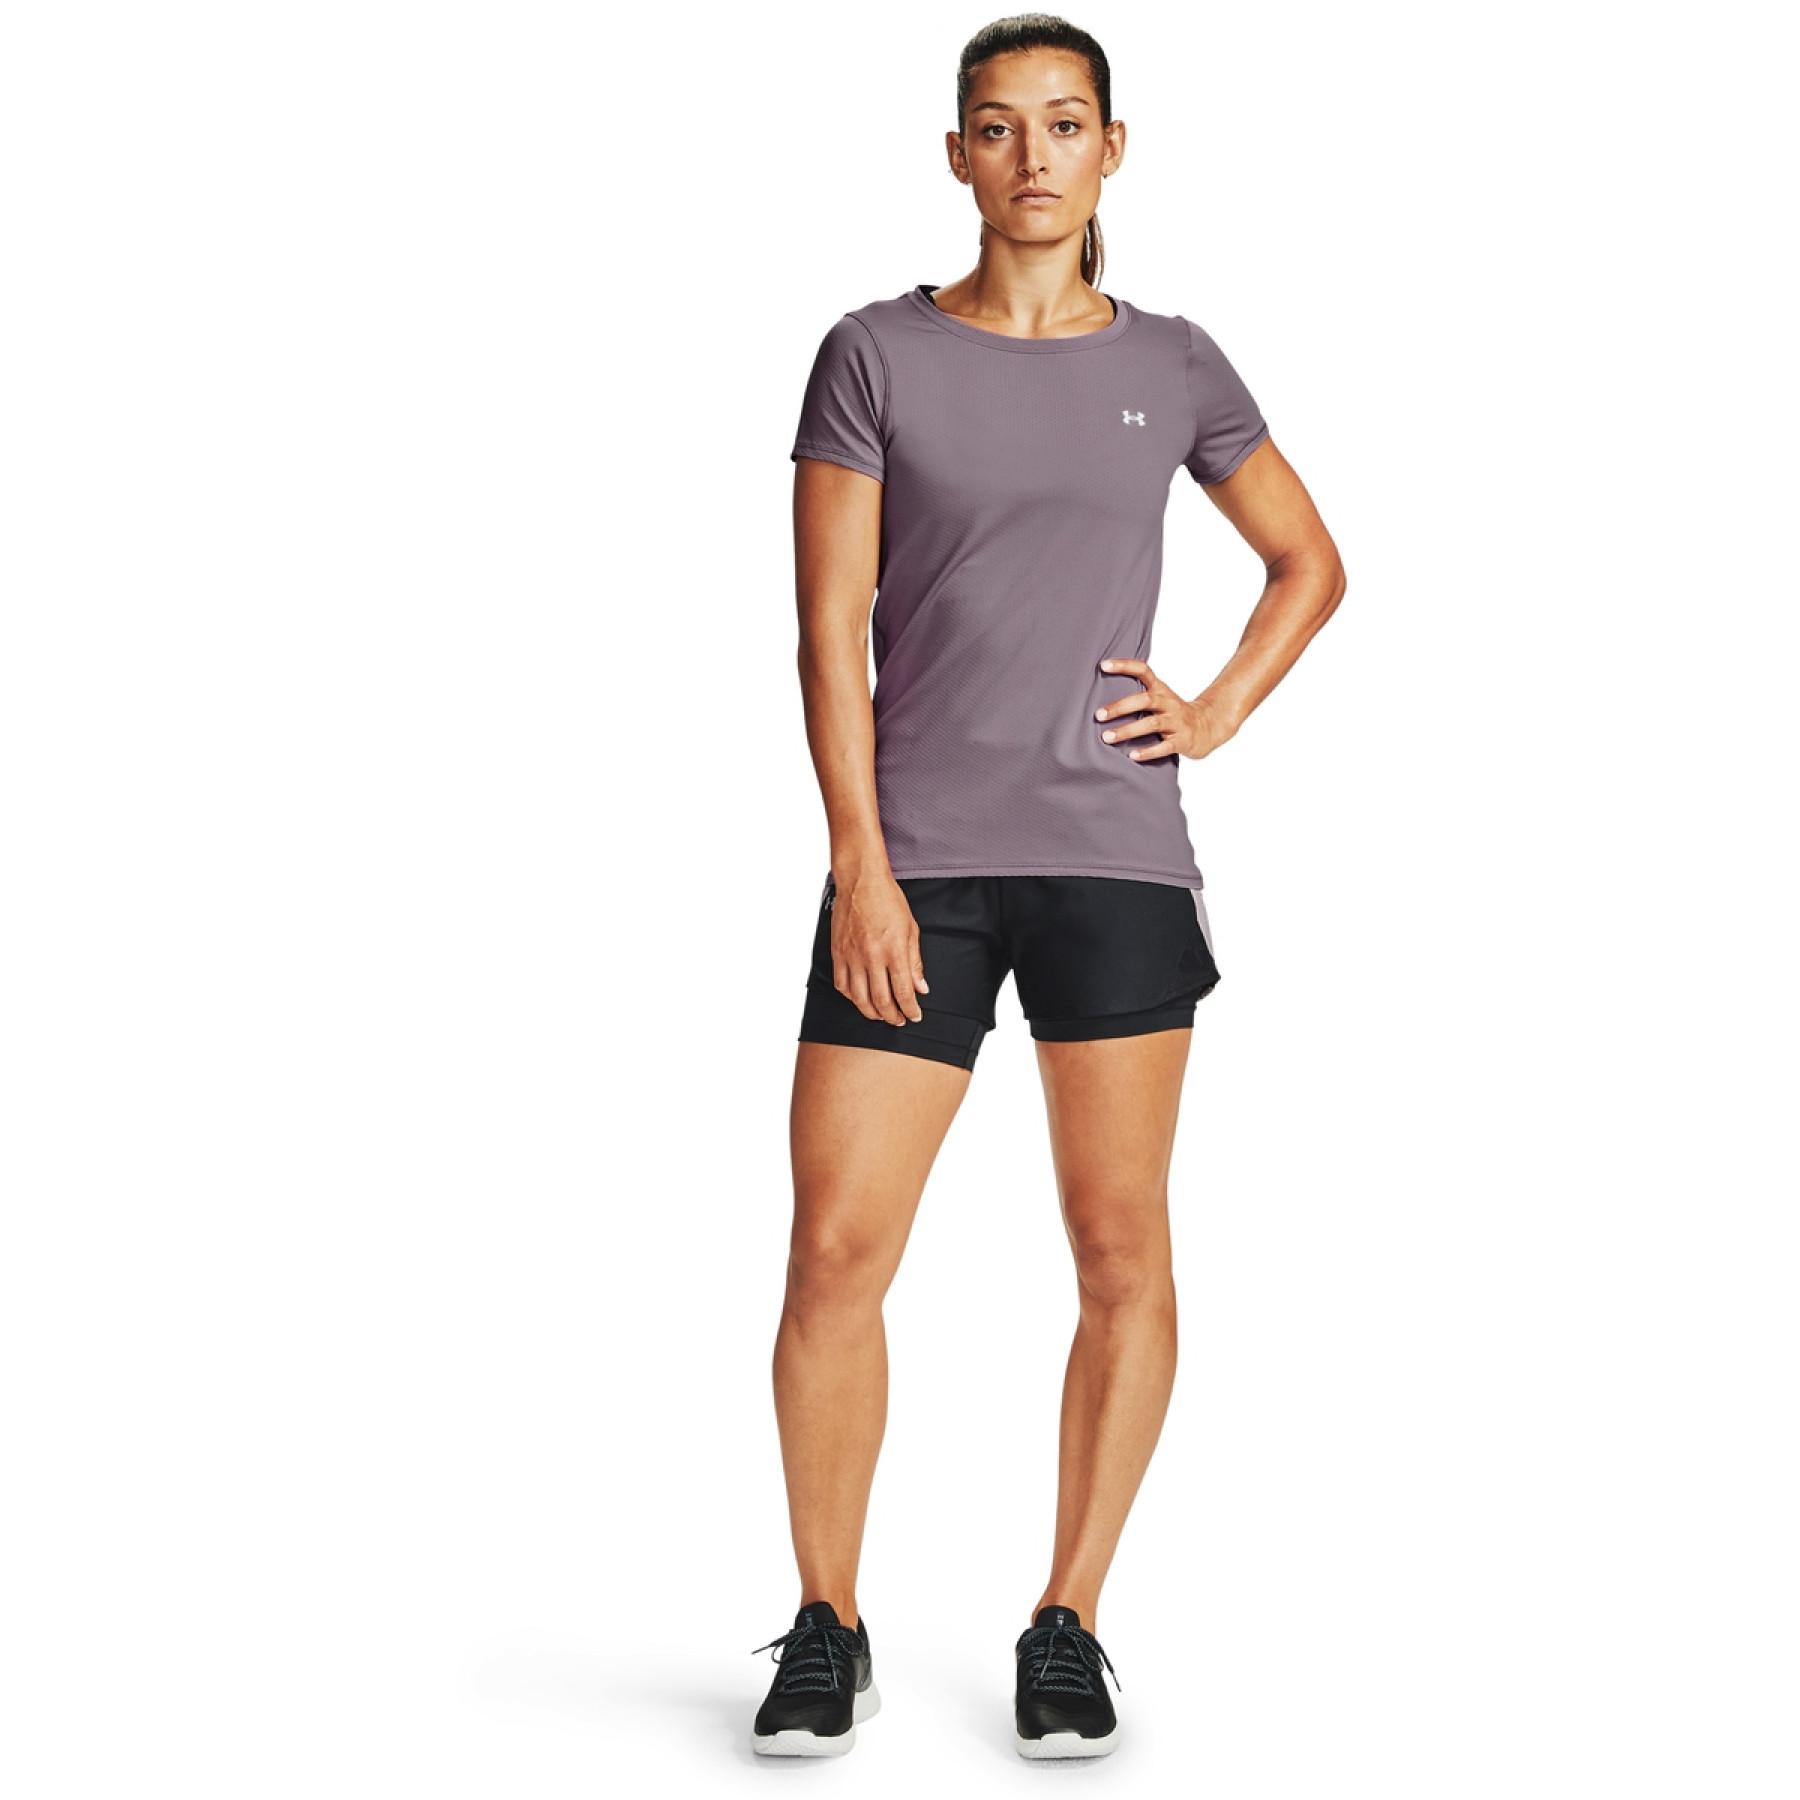 Under Armour Qualifier hexdelta Femme Femmes Fitness Training T-shirt violet